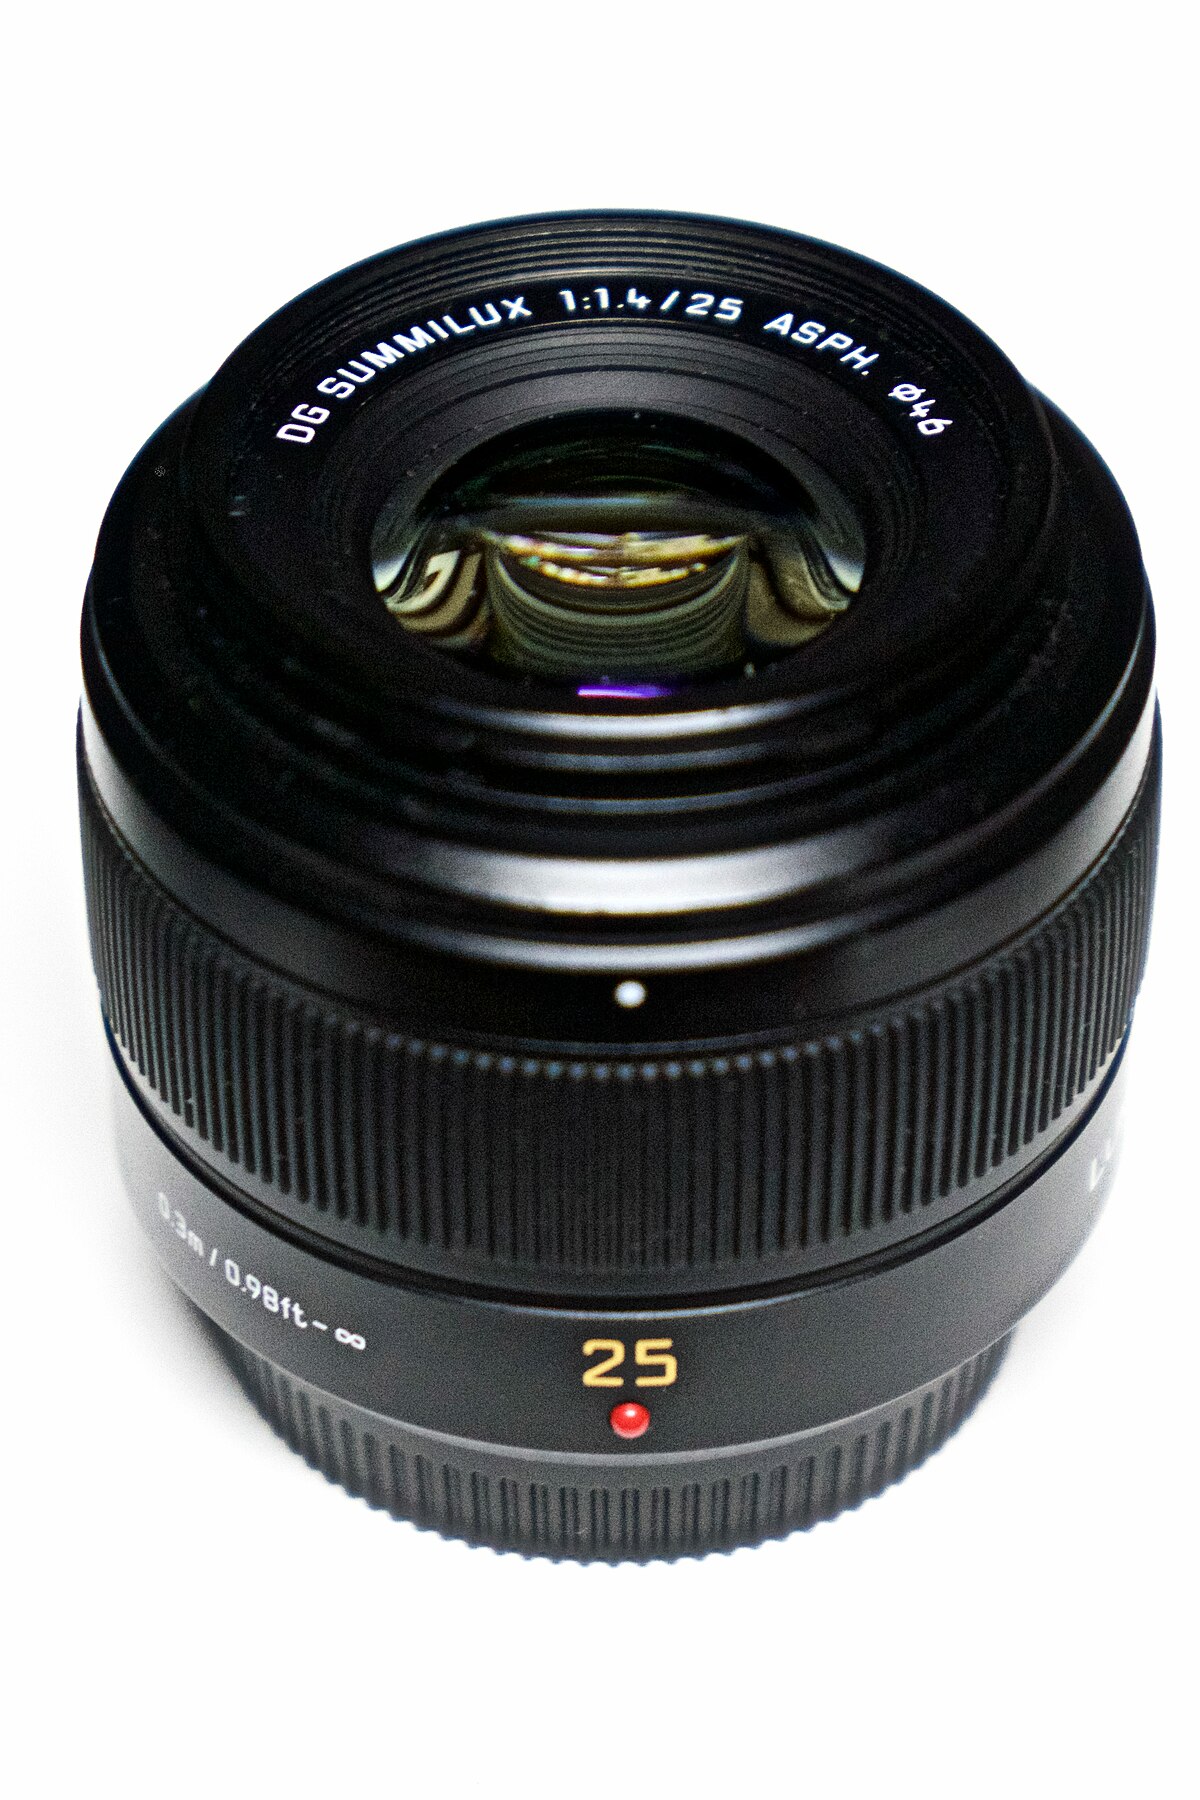 File:Panasonic Leica DG Summilux 25mm f1.4.jpg - Wikipedia